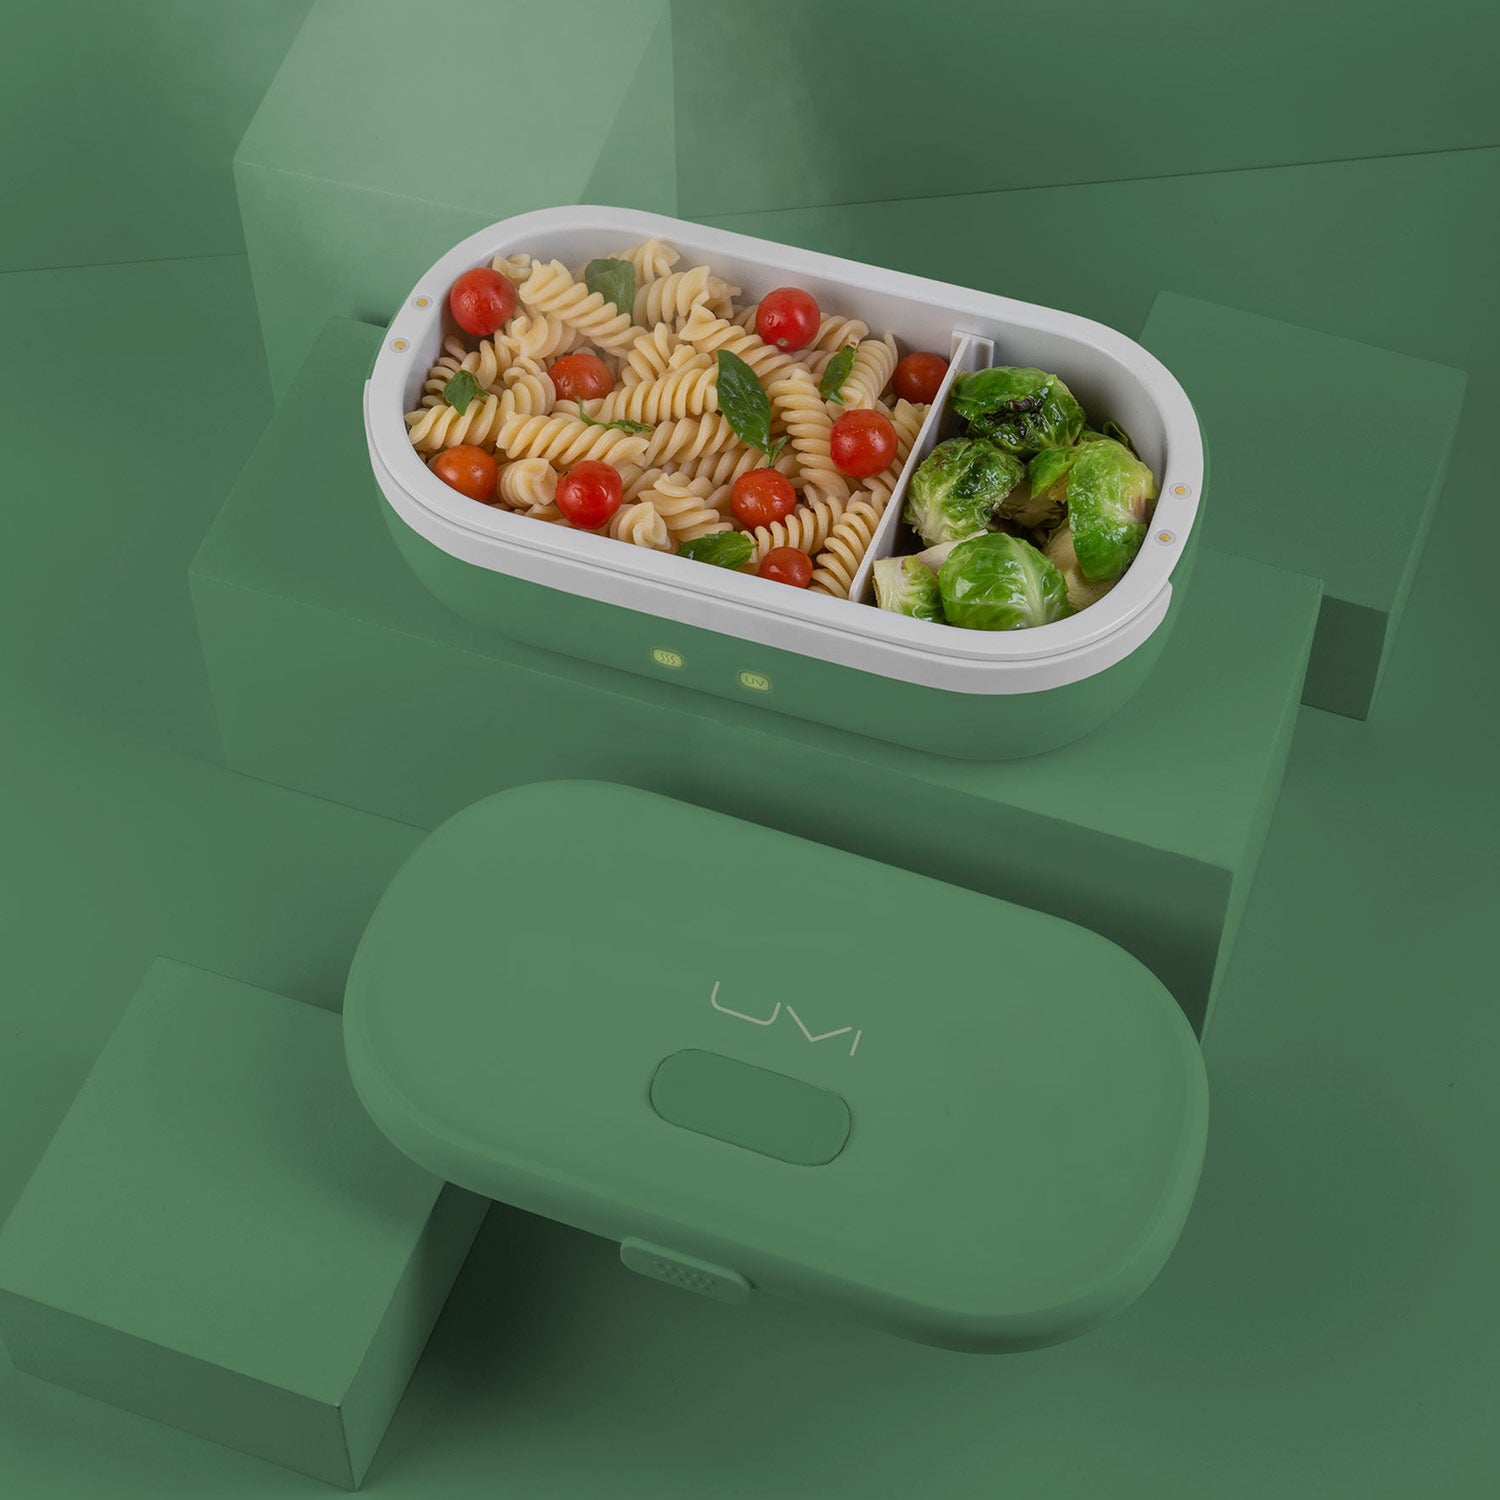 Heated Lunch Box Green